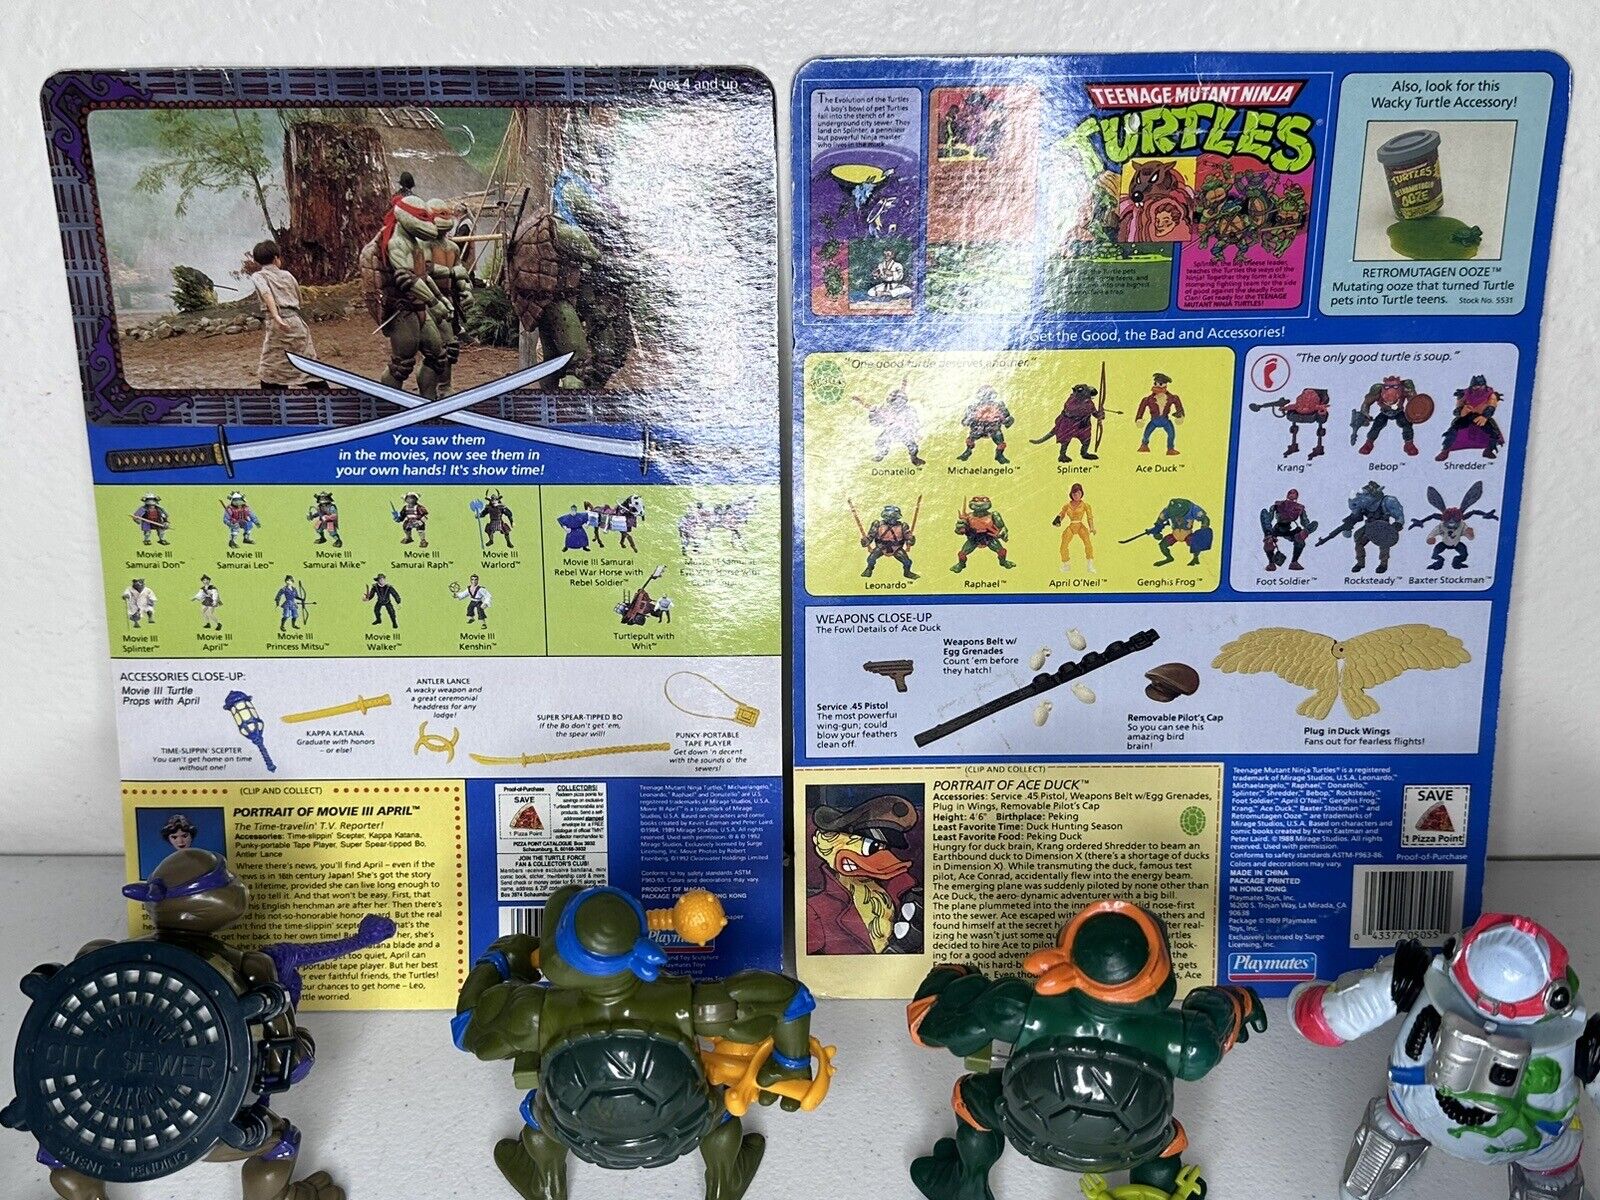 Vintage TMNT Figure Lot - 6 Characters with Original Card Backs & Accessories - Classic Teenage Mutant Ninja Turtles Collectibles - TreasuTiques